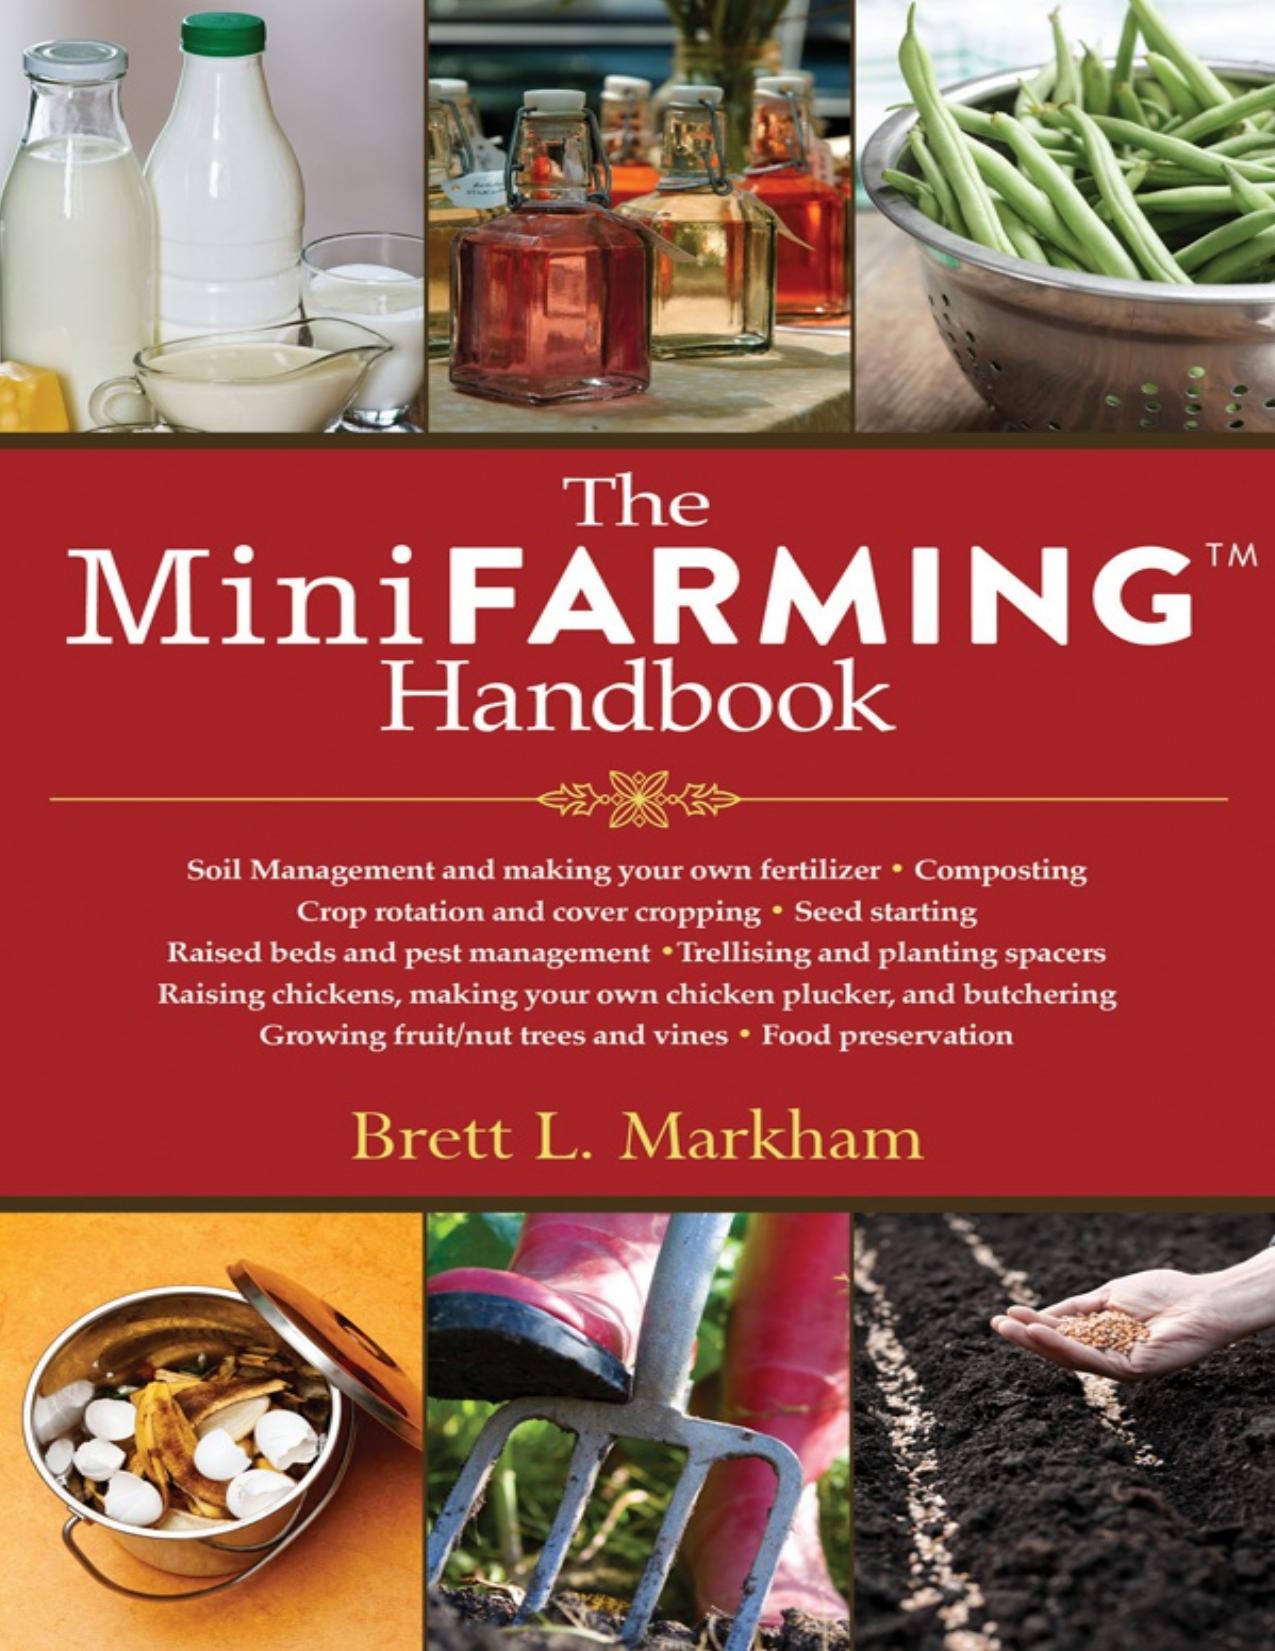 The Mini Farming Handbook by Brett L. Markham